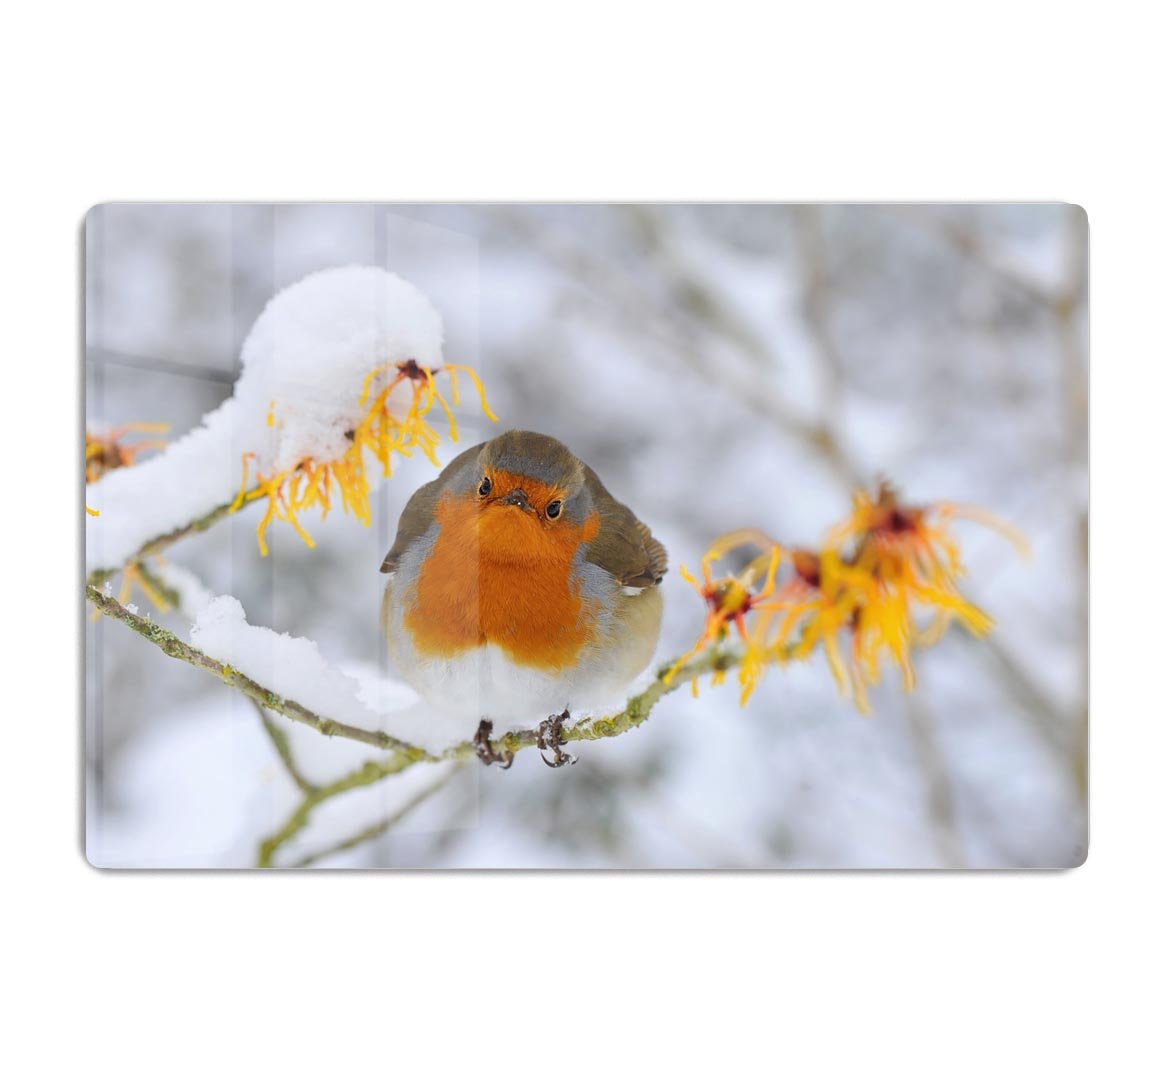 Robin in the Snow HD Metal Print - Canvas Art Rocks - 1